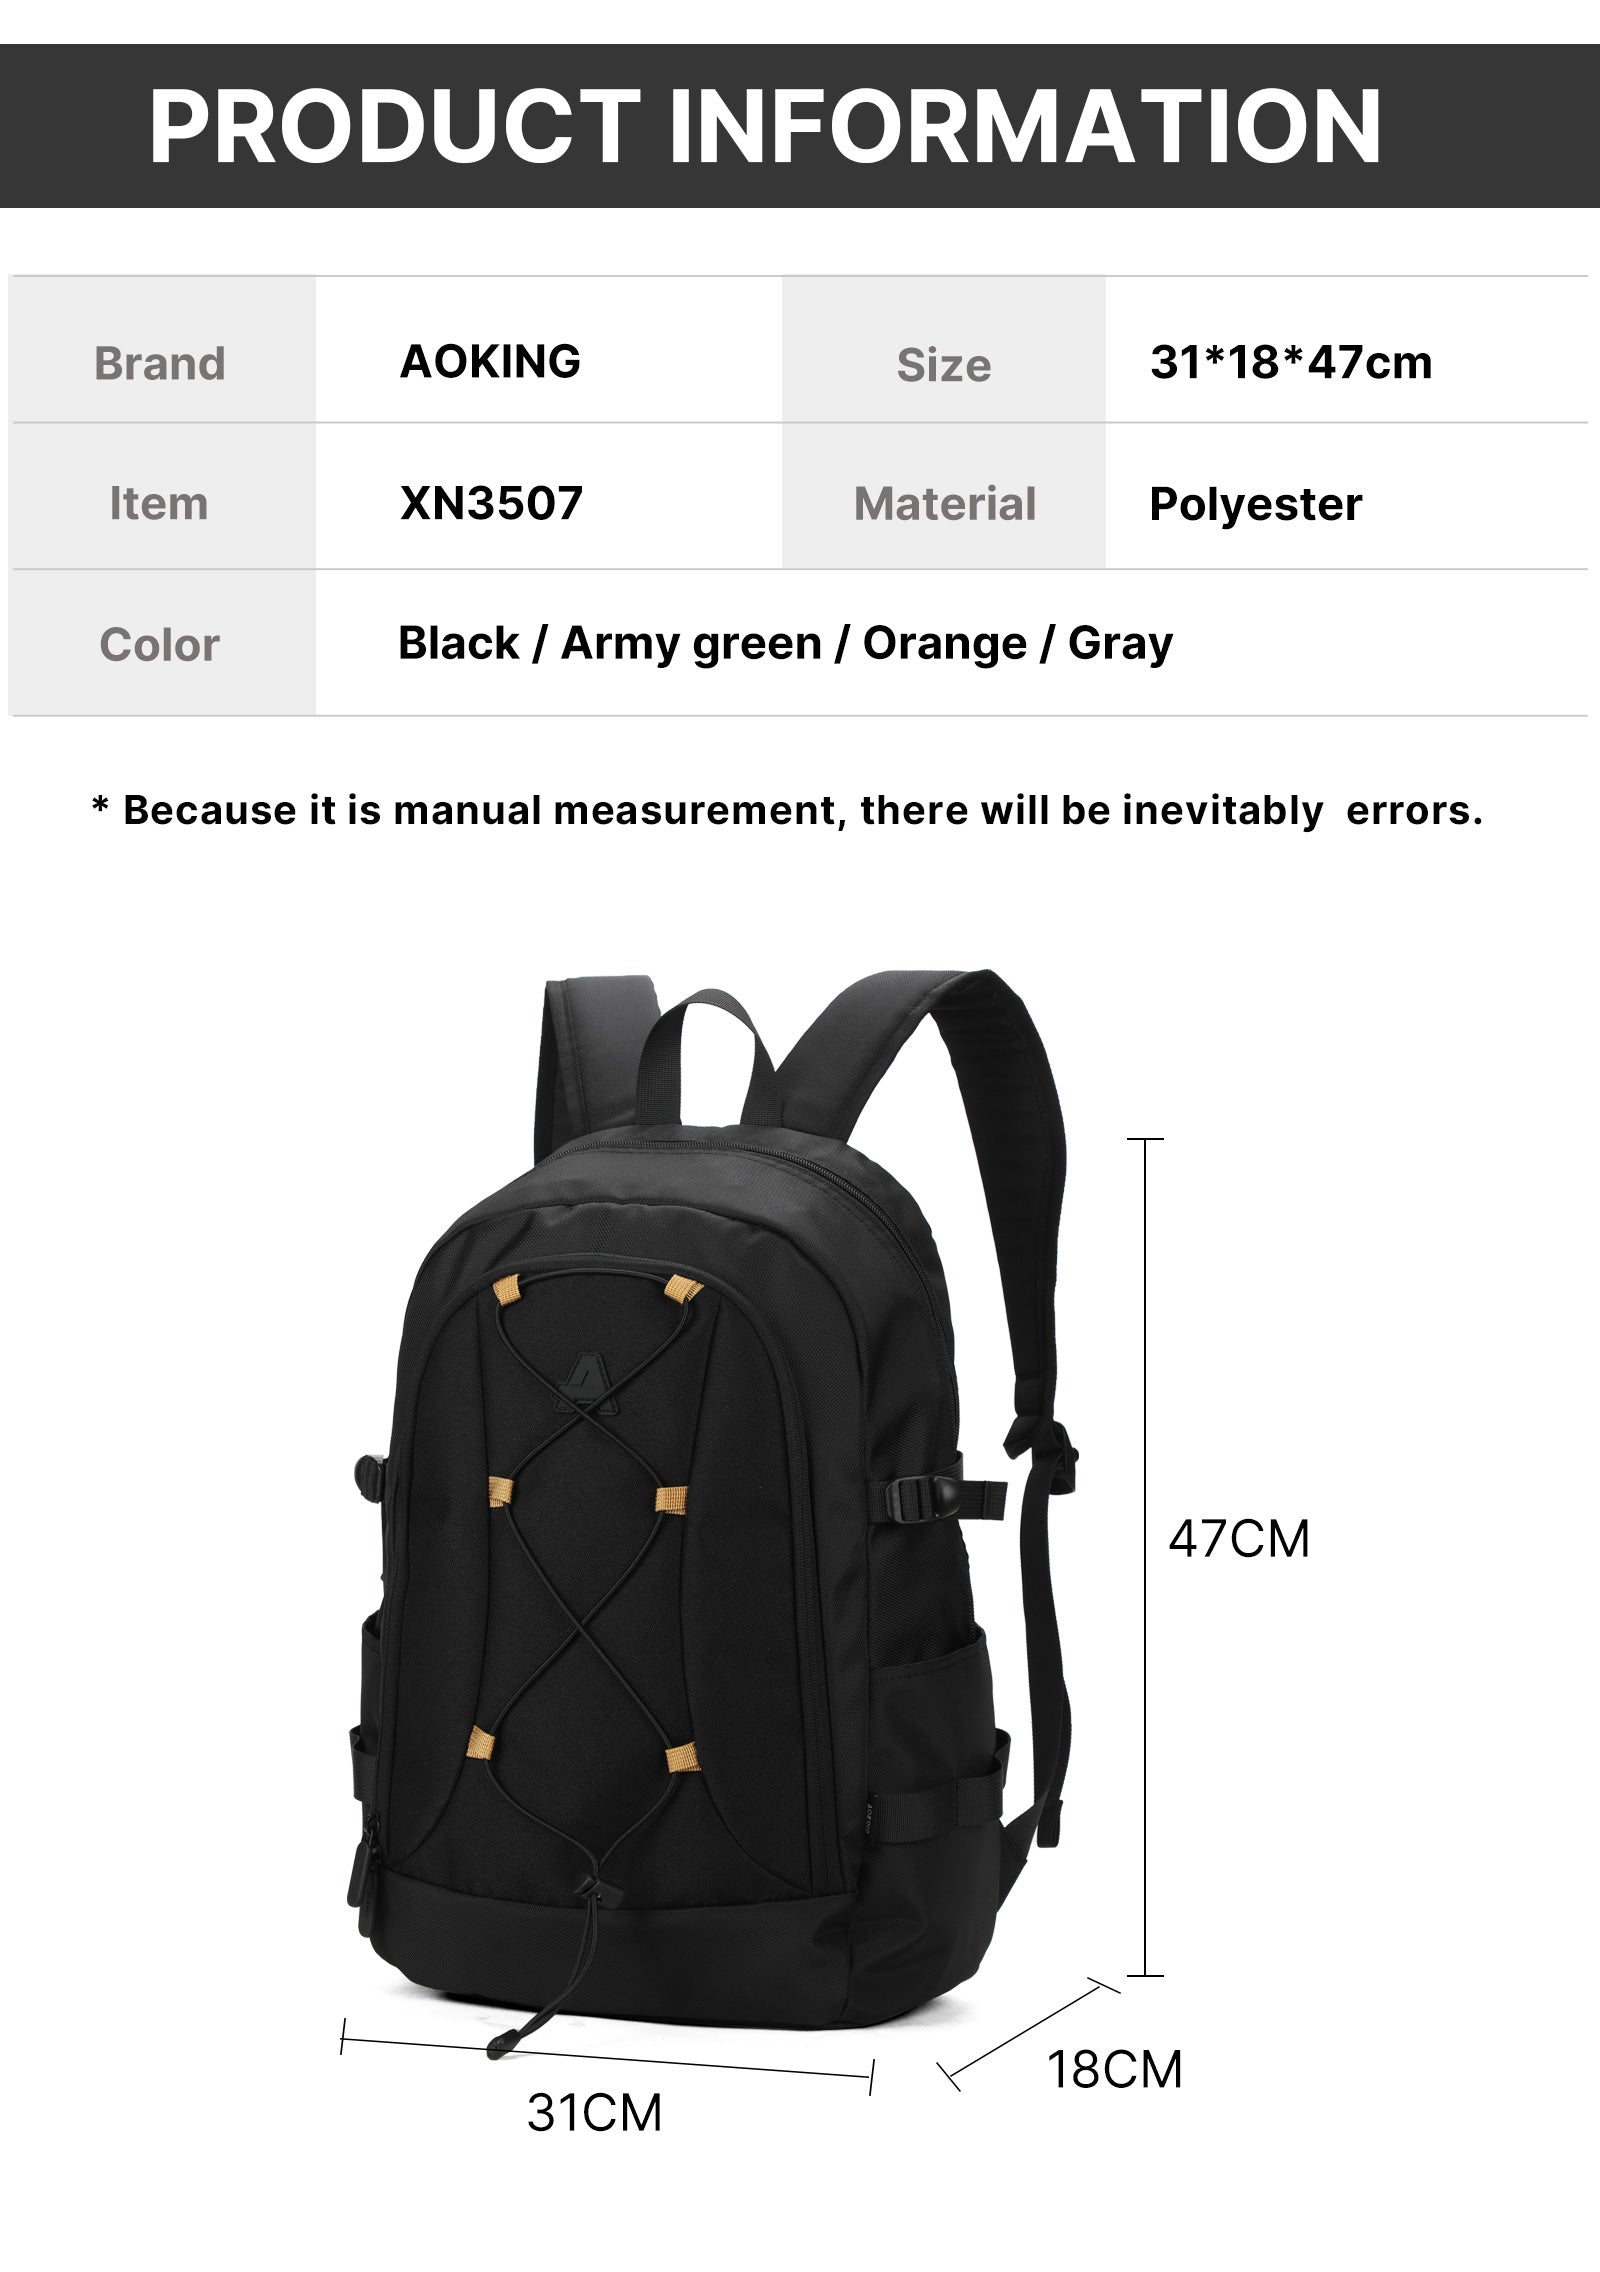 Aoking Backpack Casual Backpack Student Bag XN3507